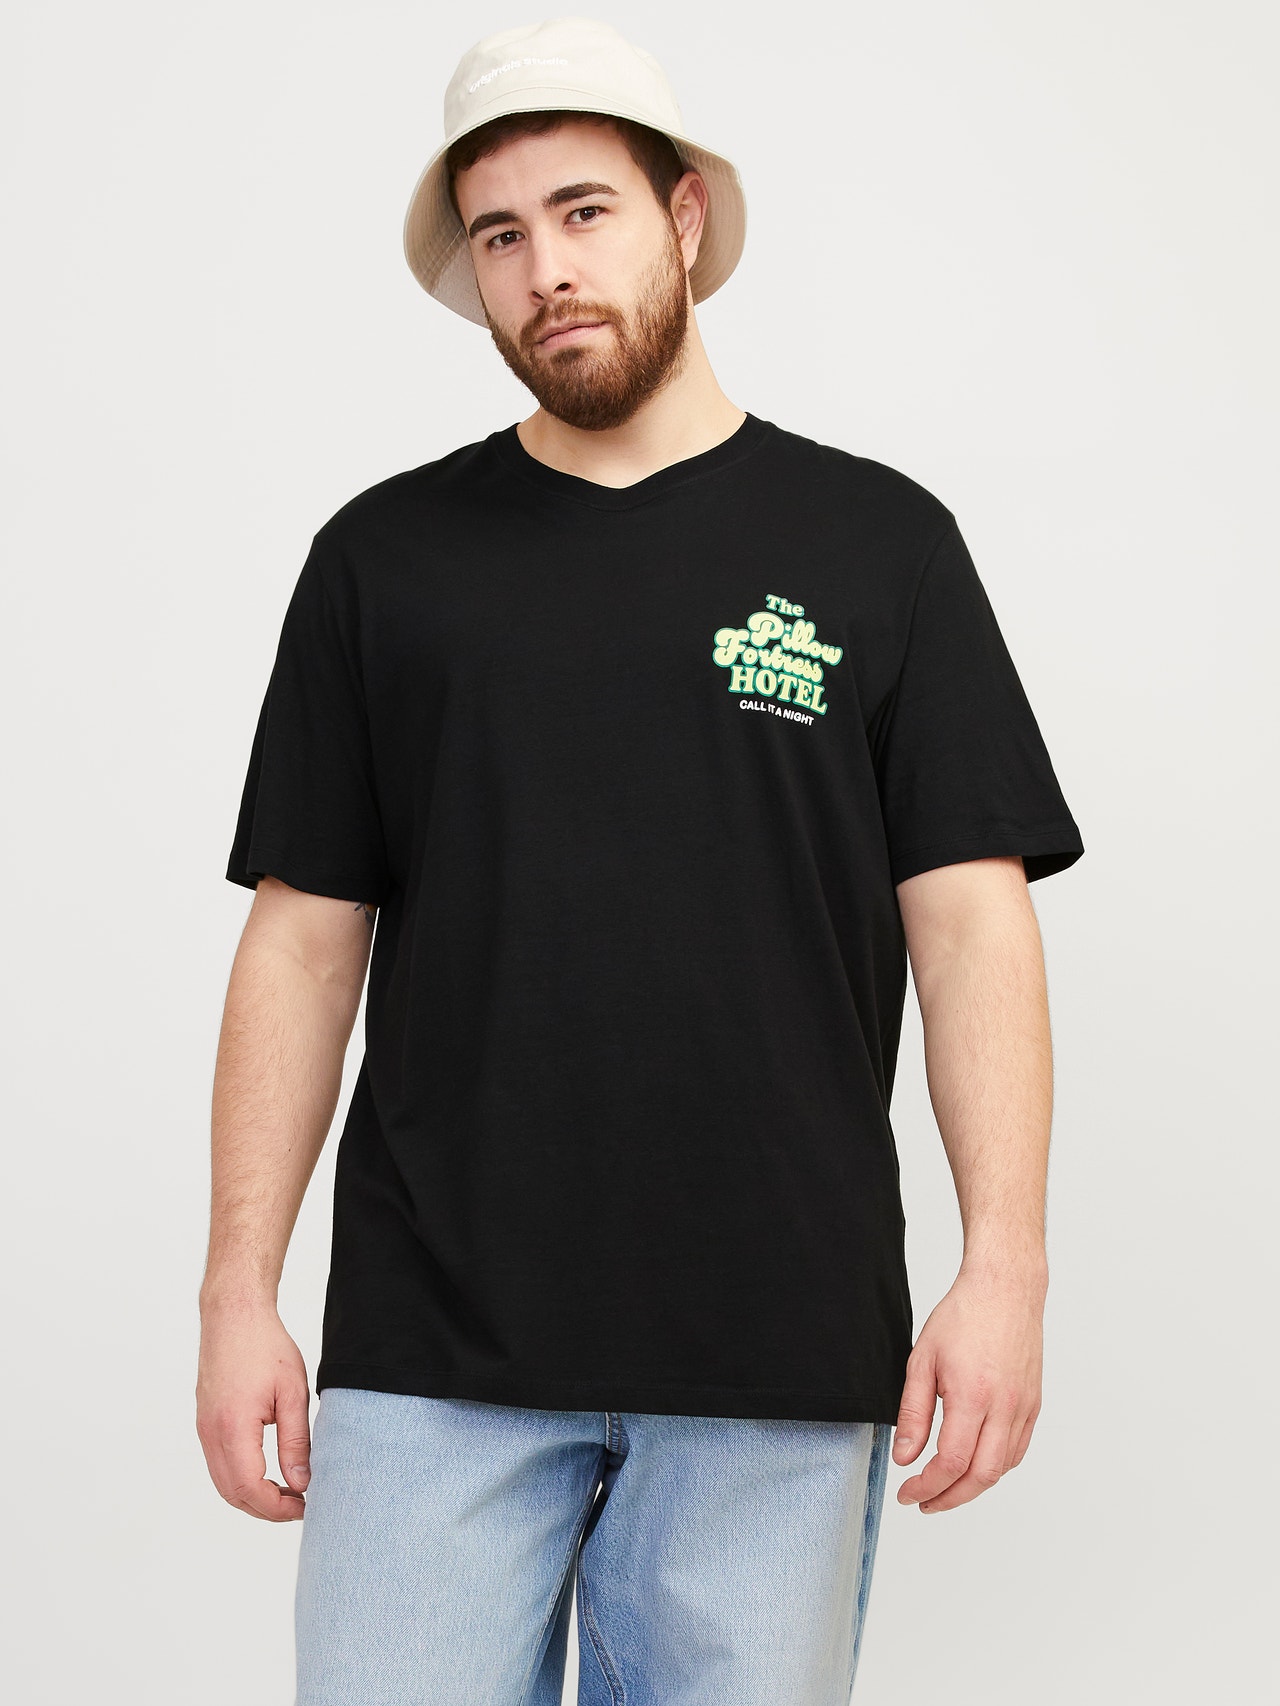 Jack & Jones Plus Size Bedrukt T-shirt -Black - 12257565